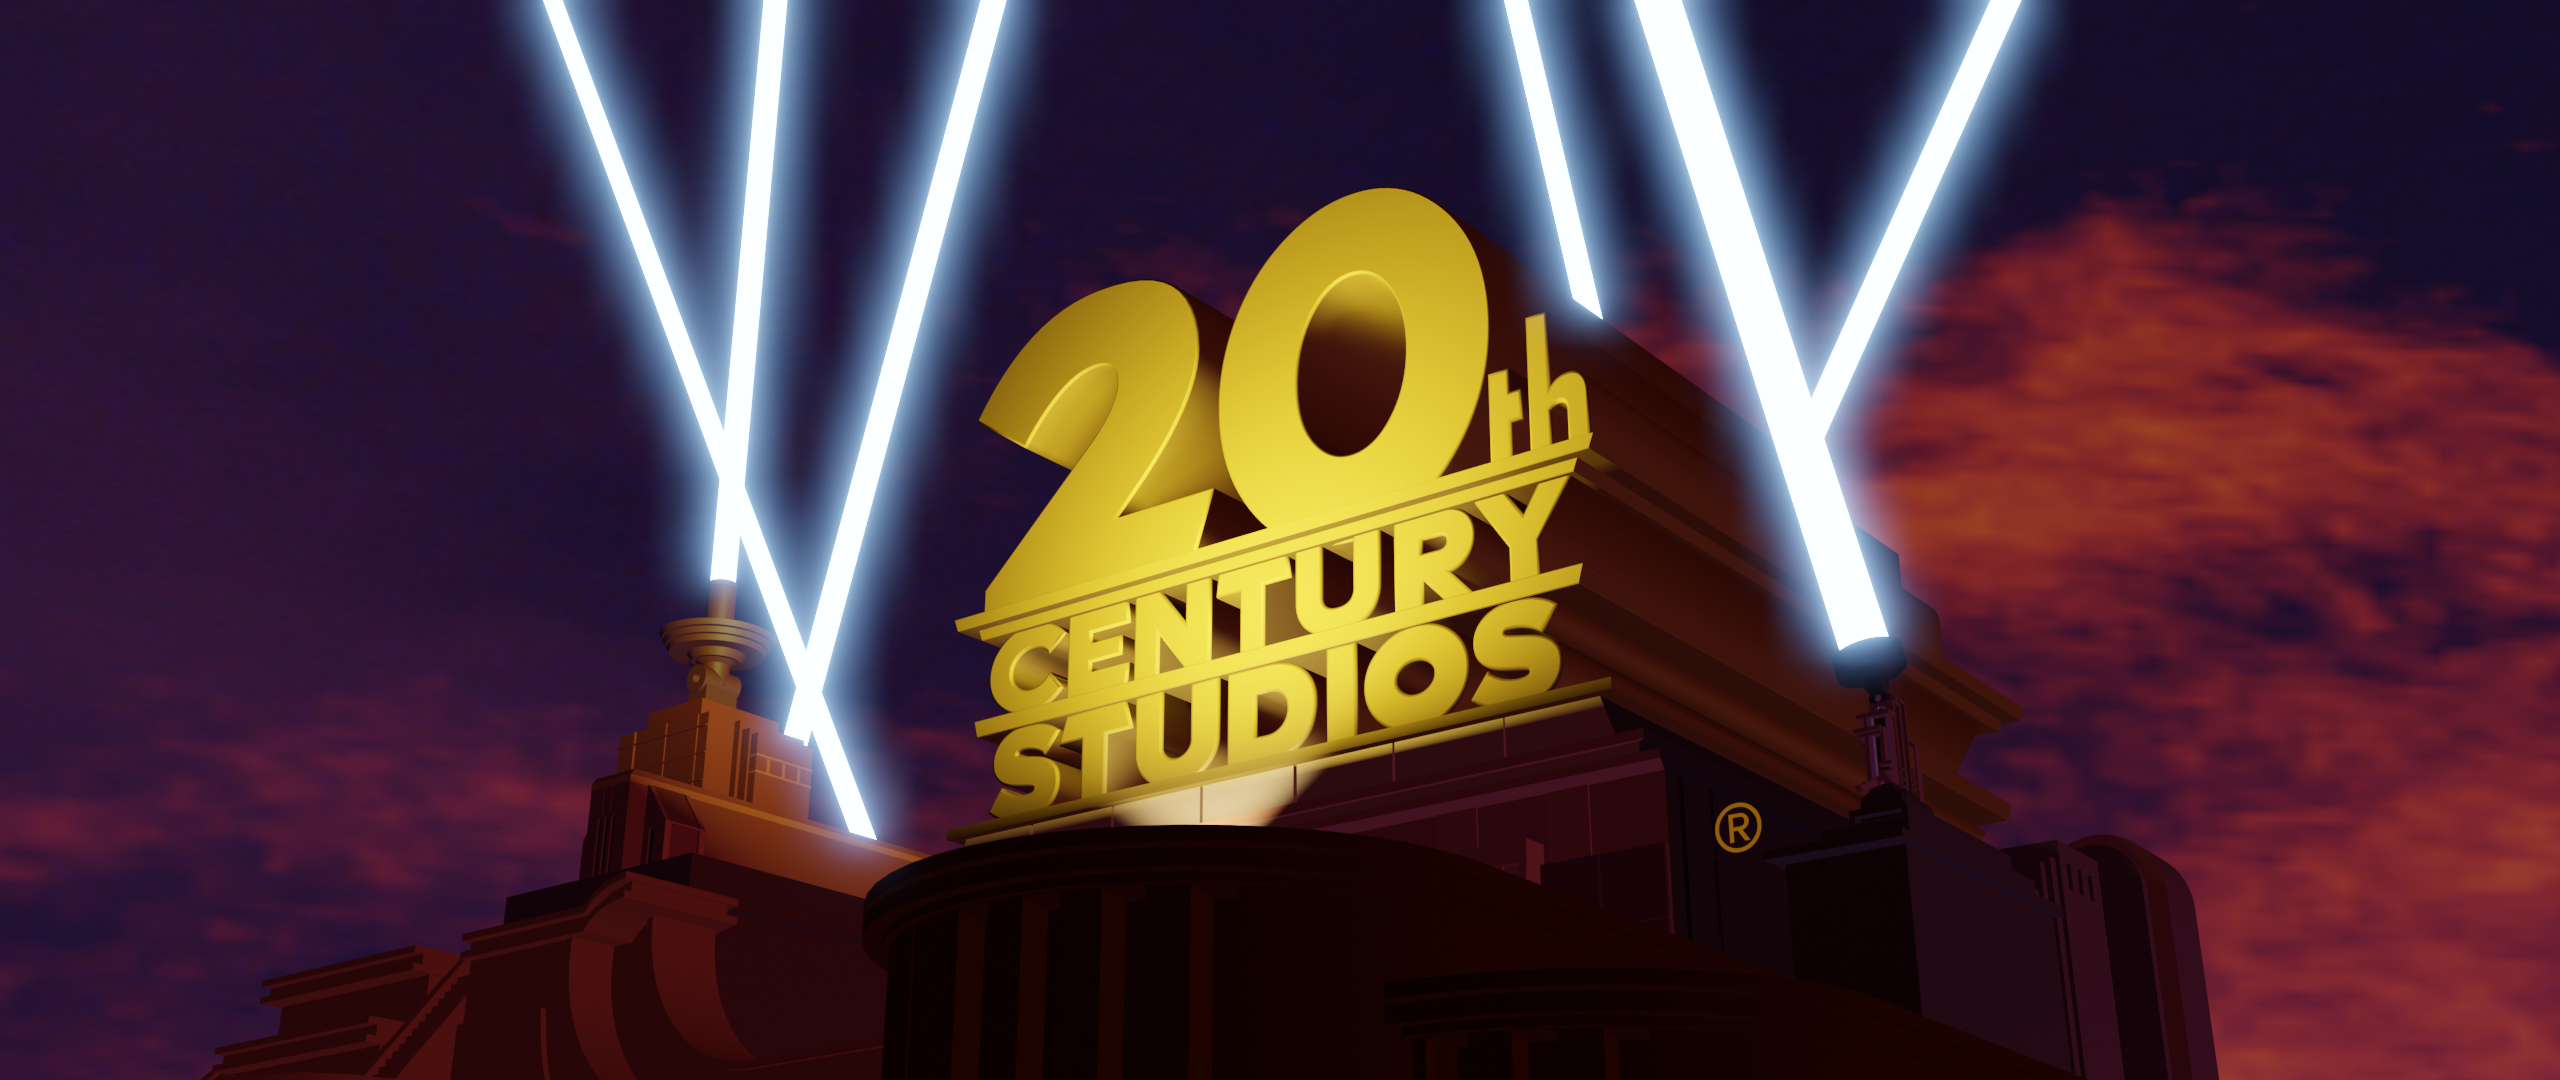 20th Century Studios Intro (My version) by TheMasterCreative on DeviantArt